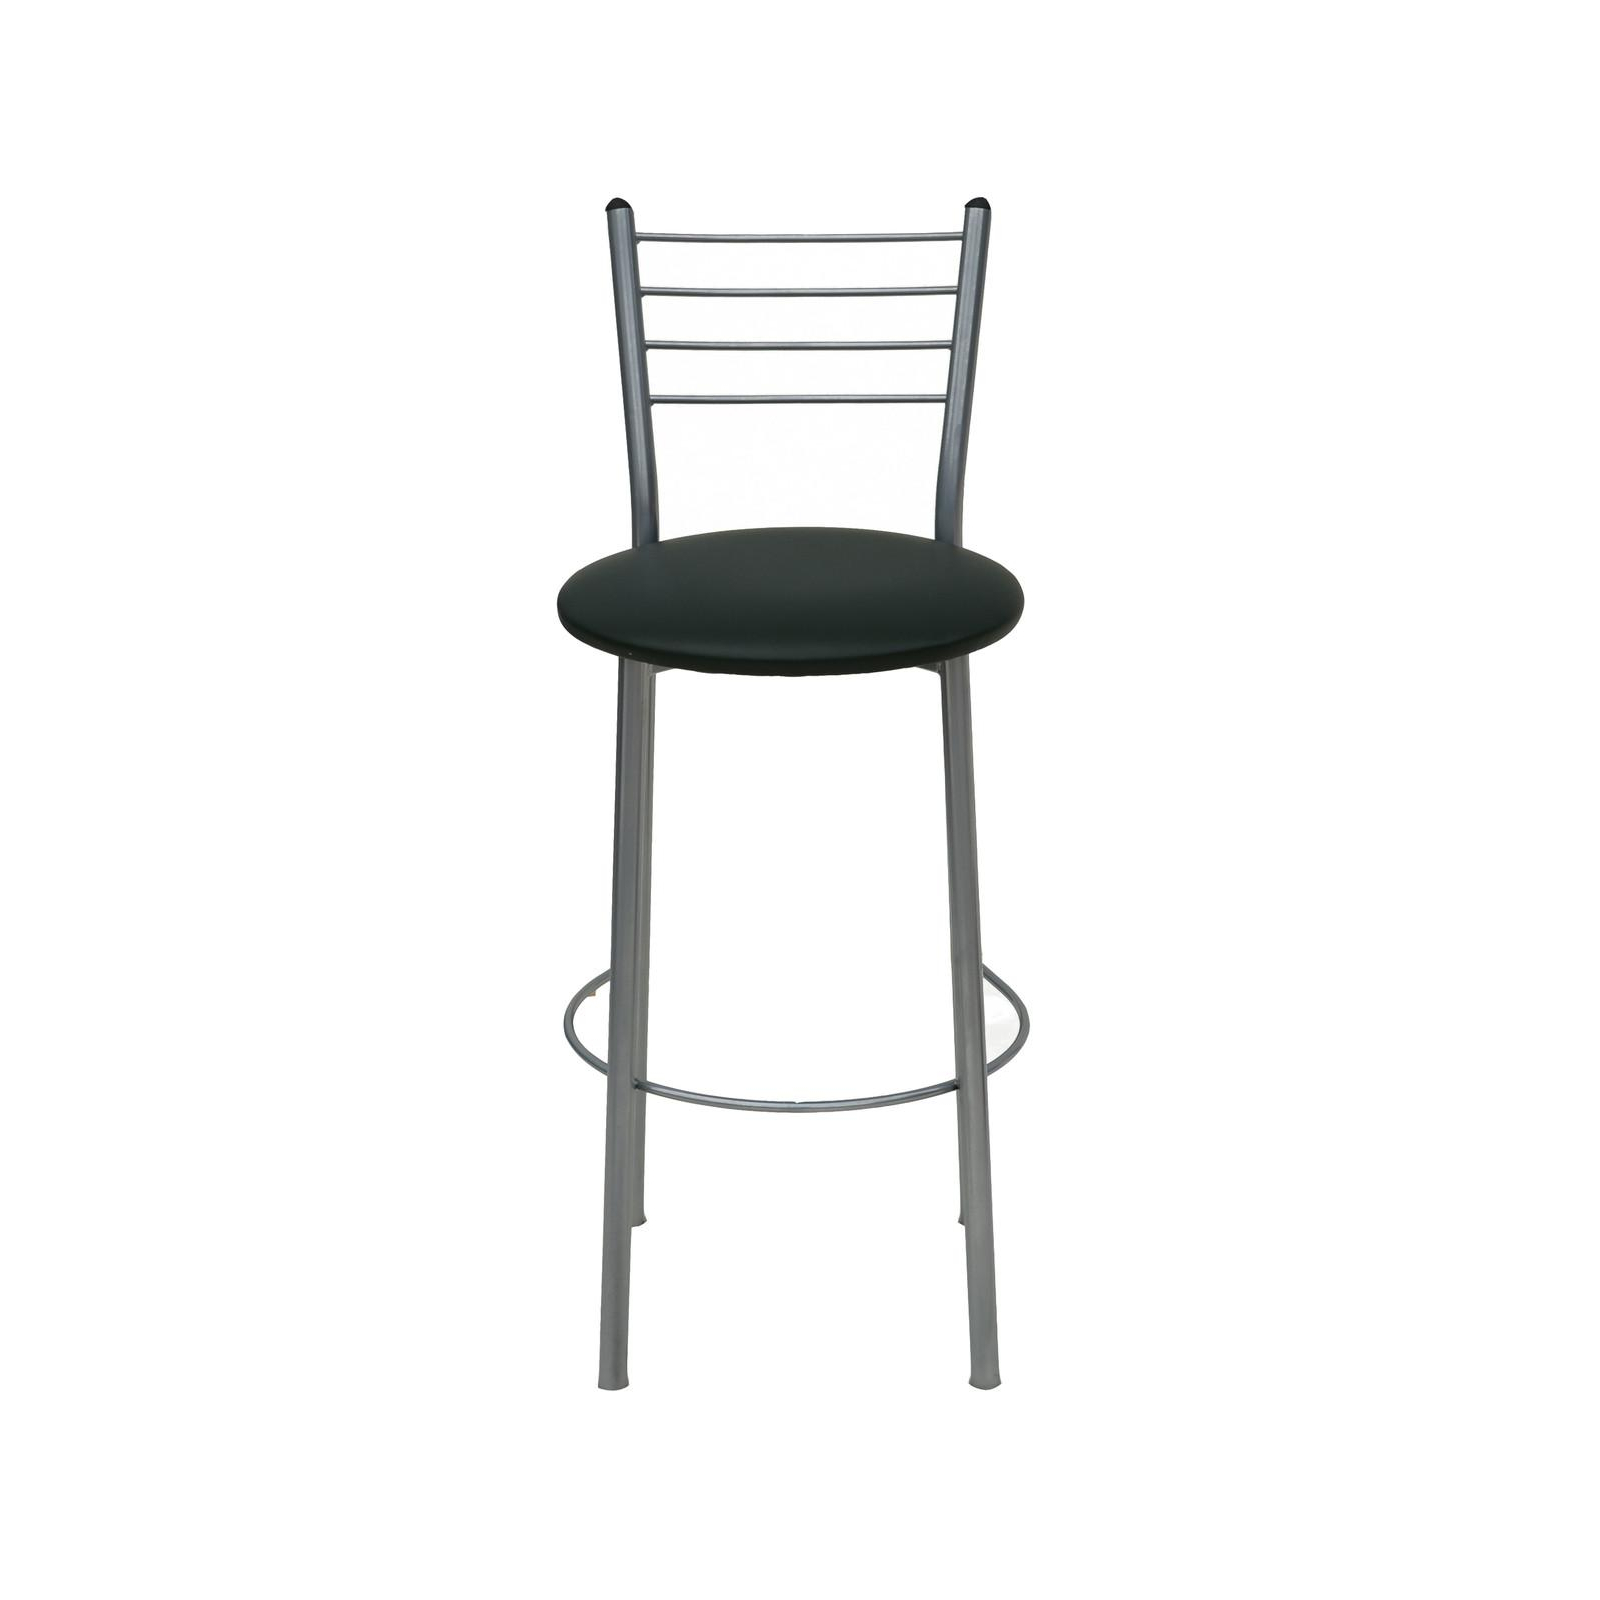 Барний стілець Примтекс плюс барный 1022 Hoker alum S-6214 Dark Green (1022 HOKER alum S-6214)